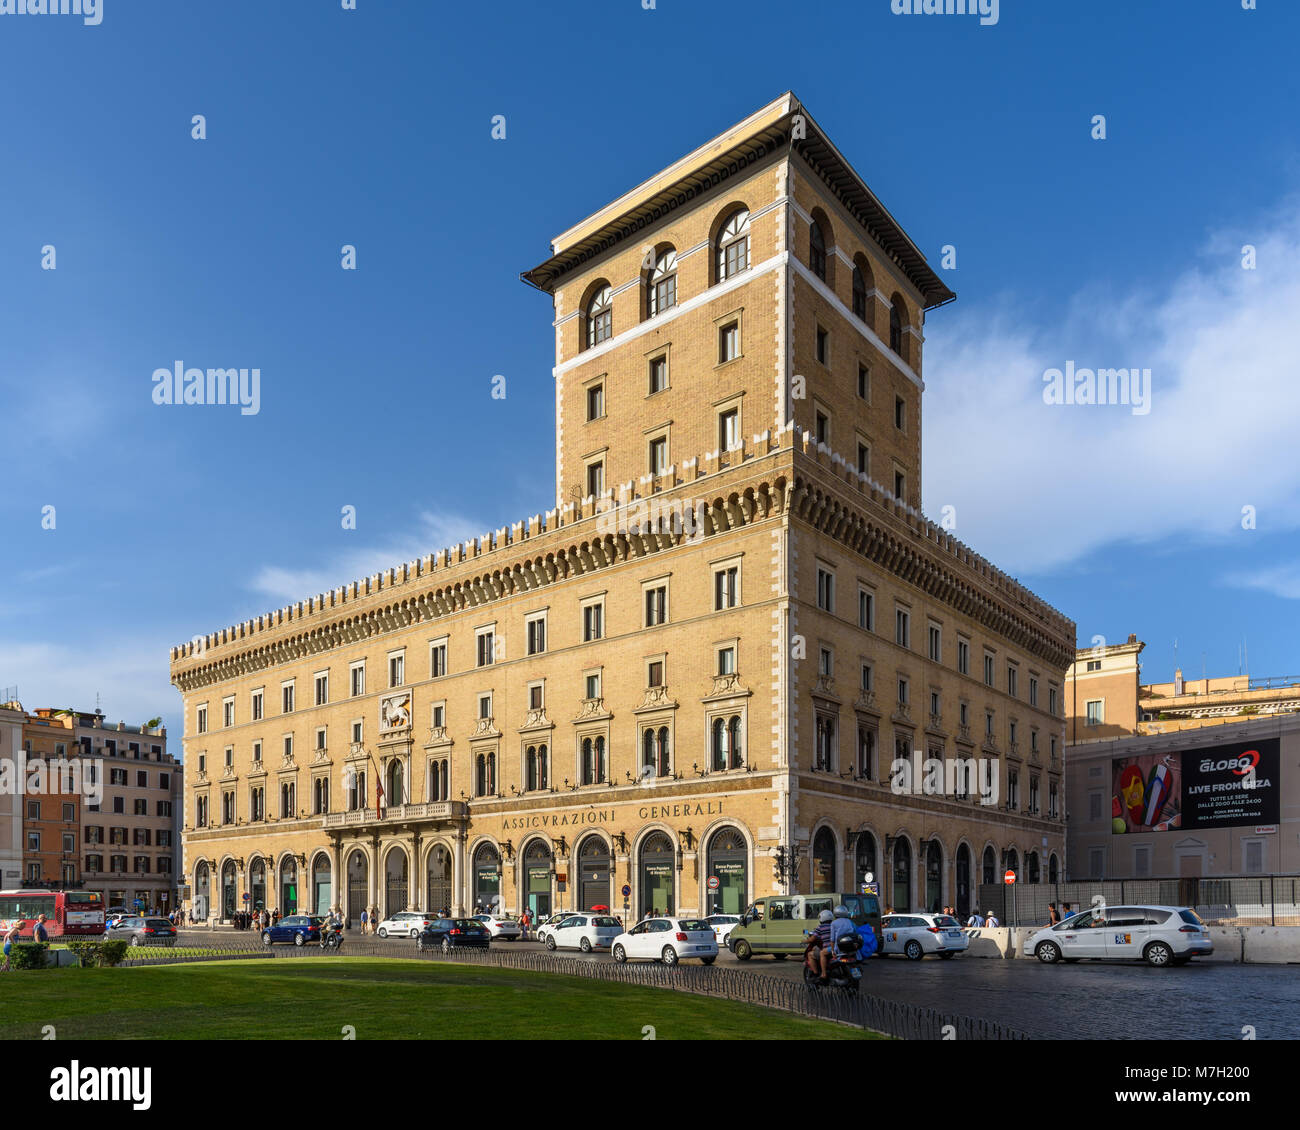 Assicurazioni Generali Paalce, Piazza Venezia, Rome, Italie Banque D'Images